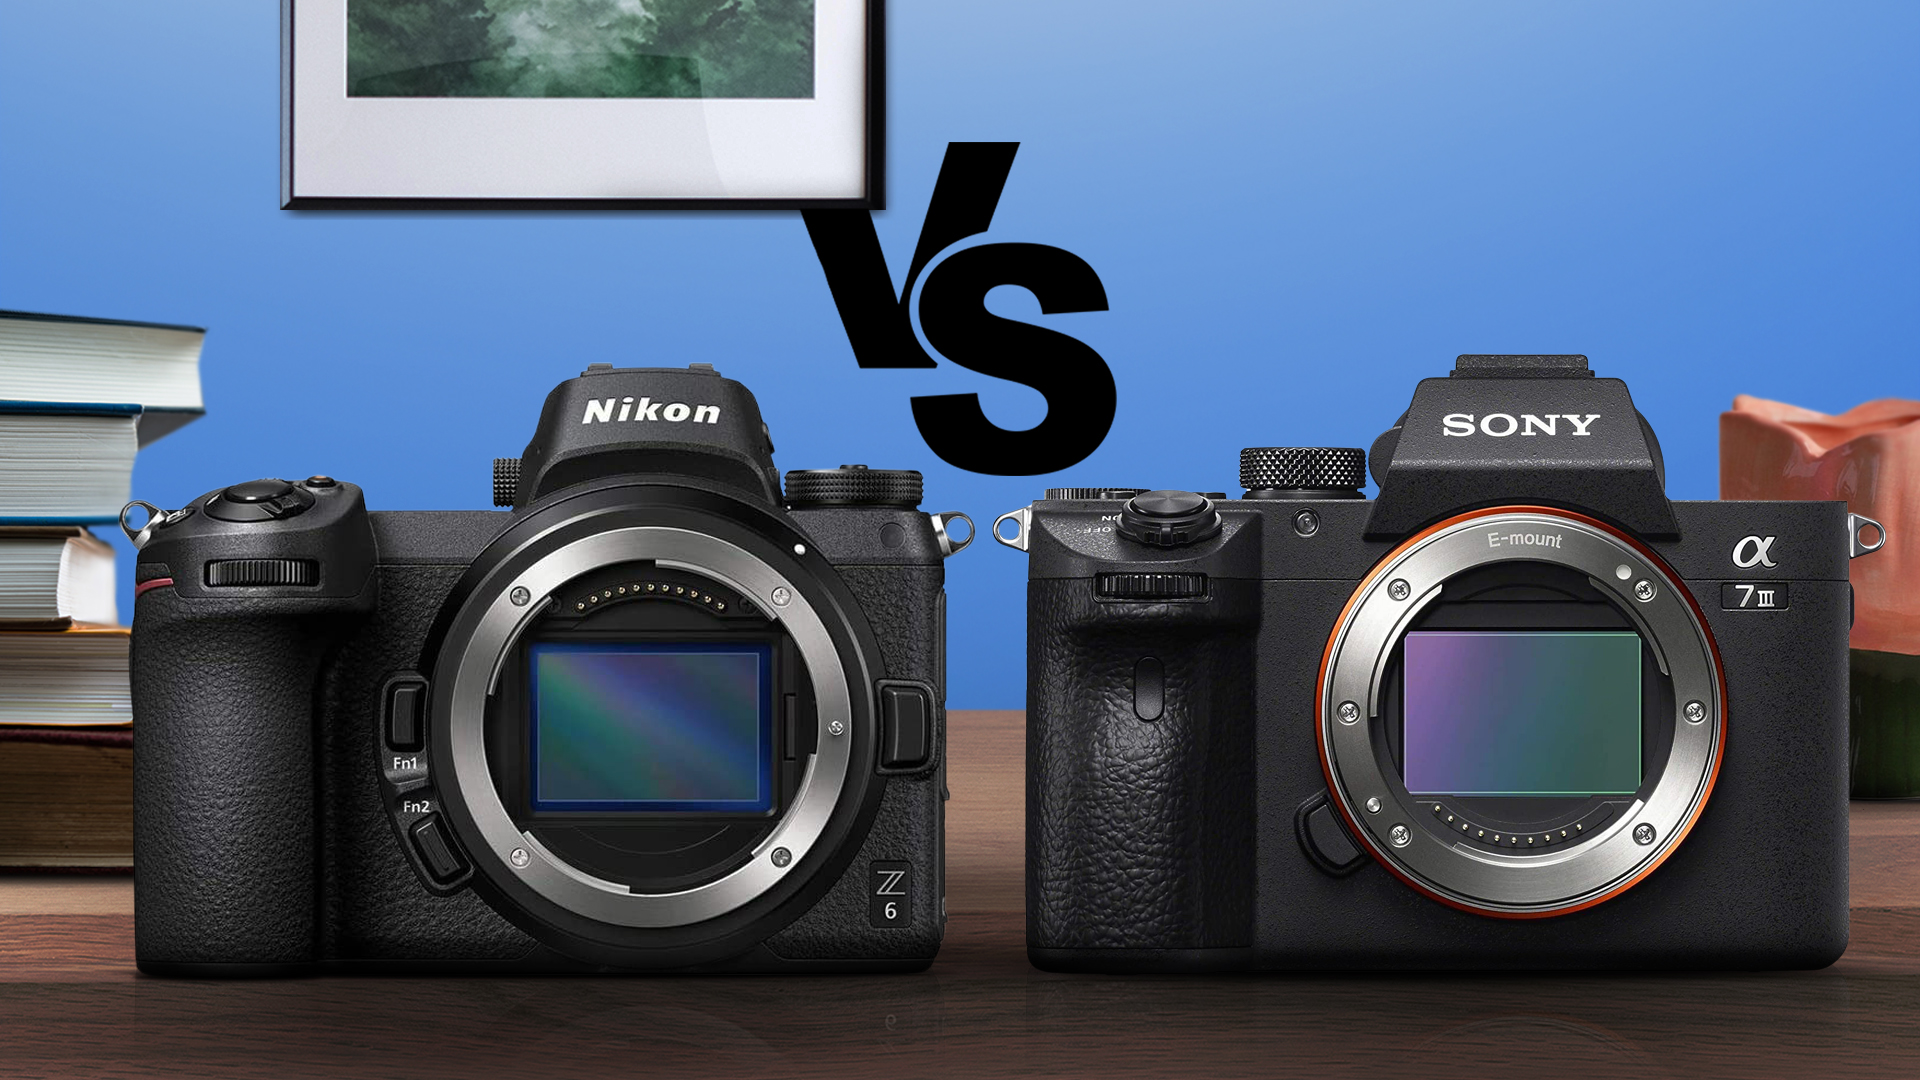 Nikon Z6 vs Sony A7 III Comparison